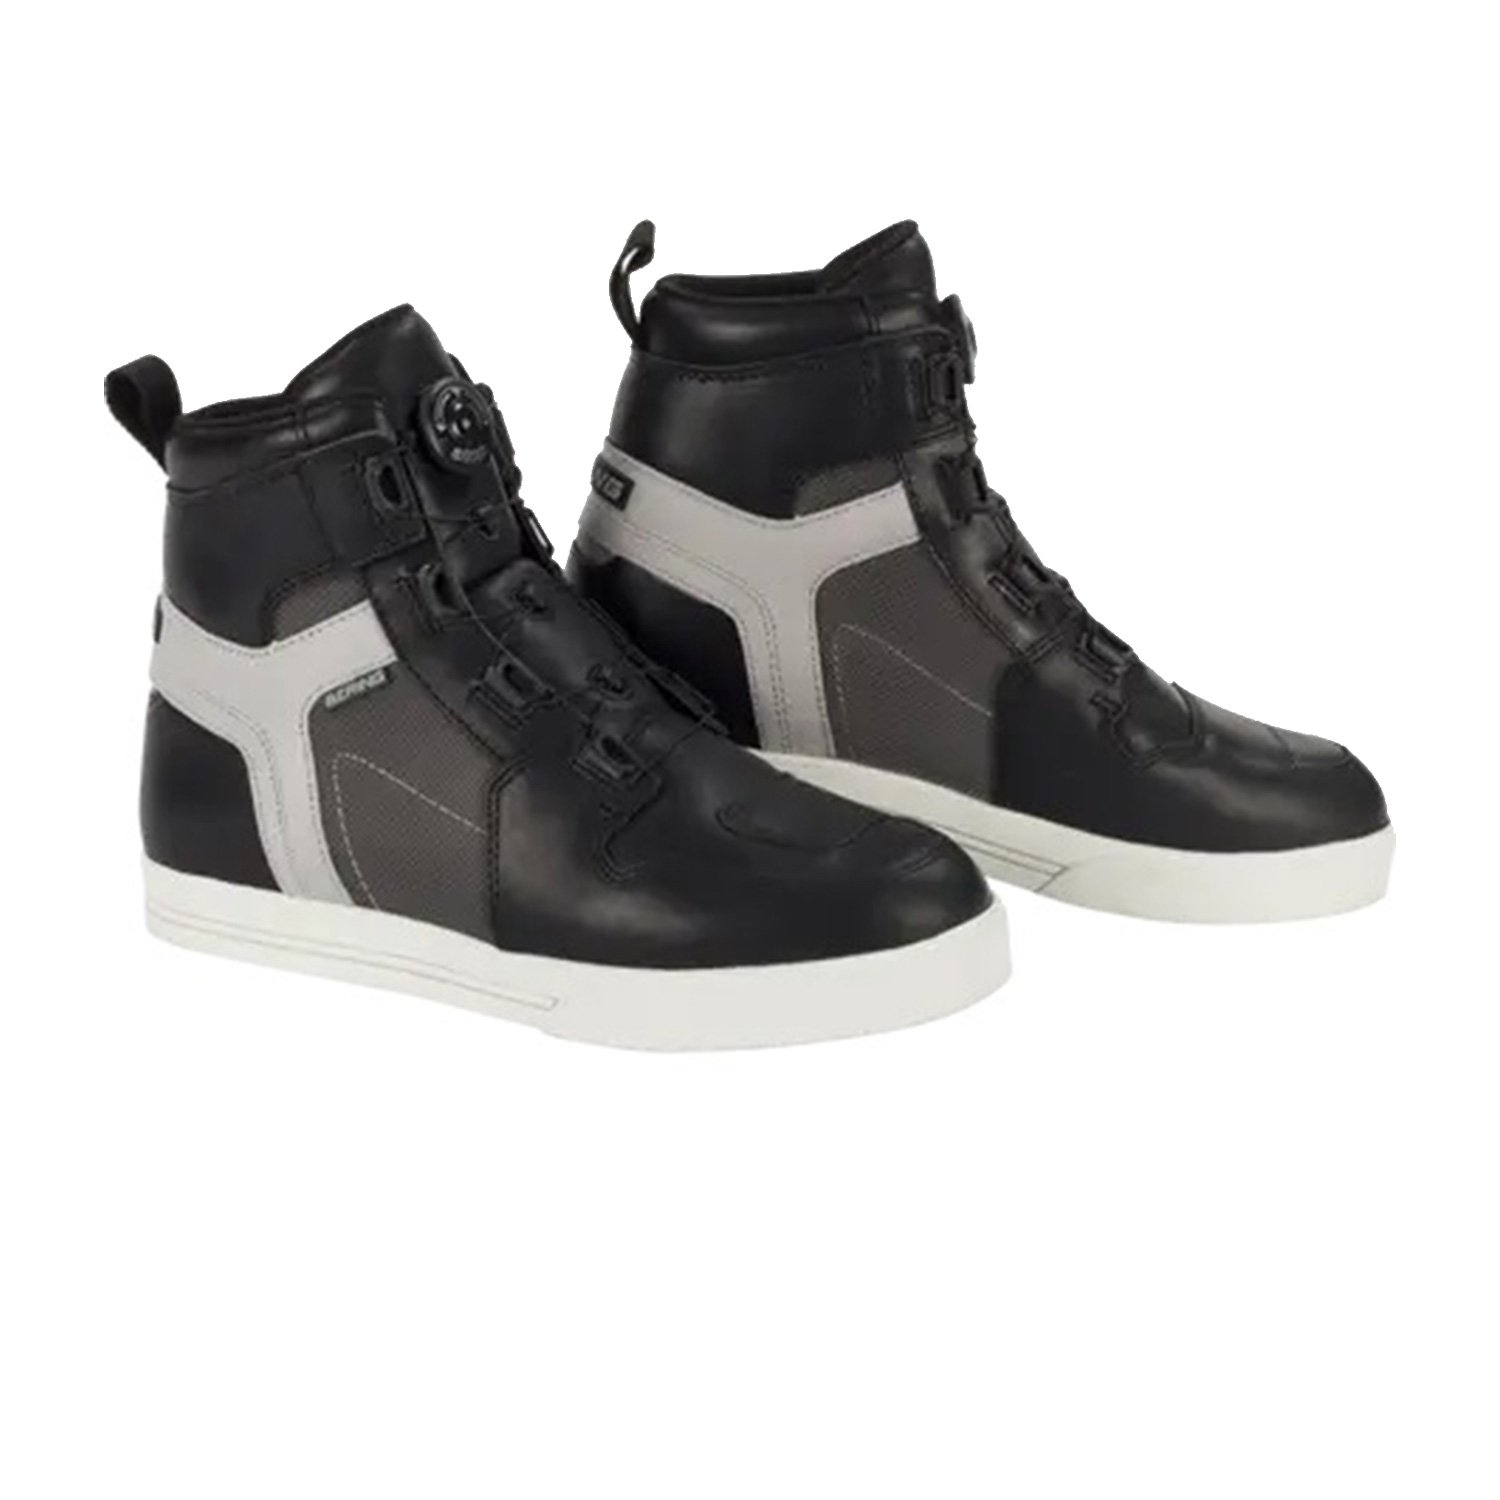 Image of Bering Sneakers Reflex Vented Black Grey Size 42 EN